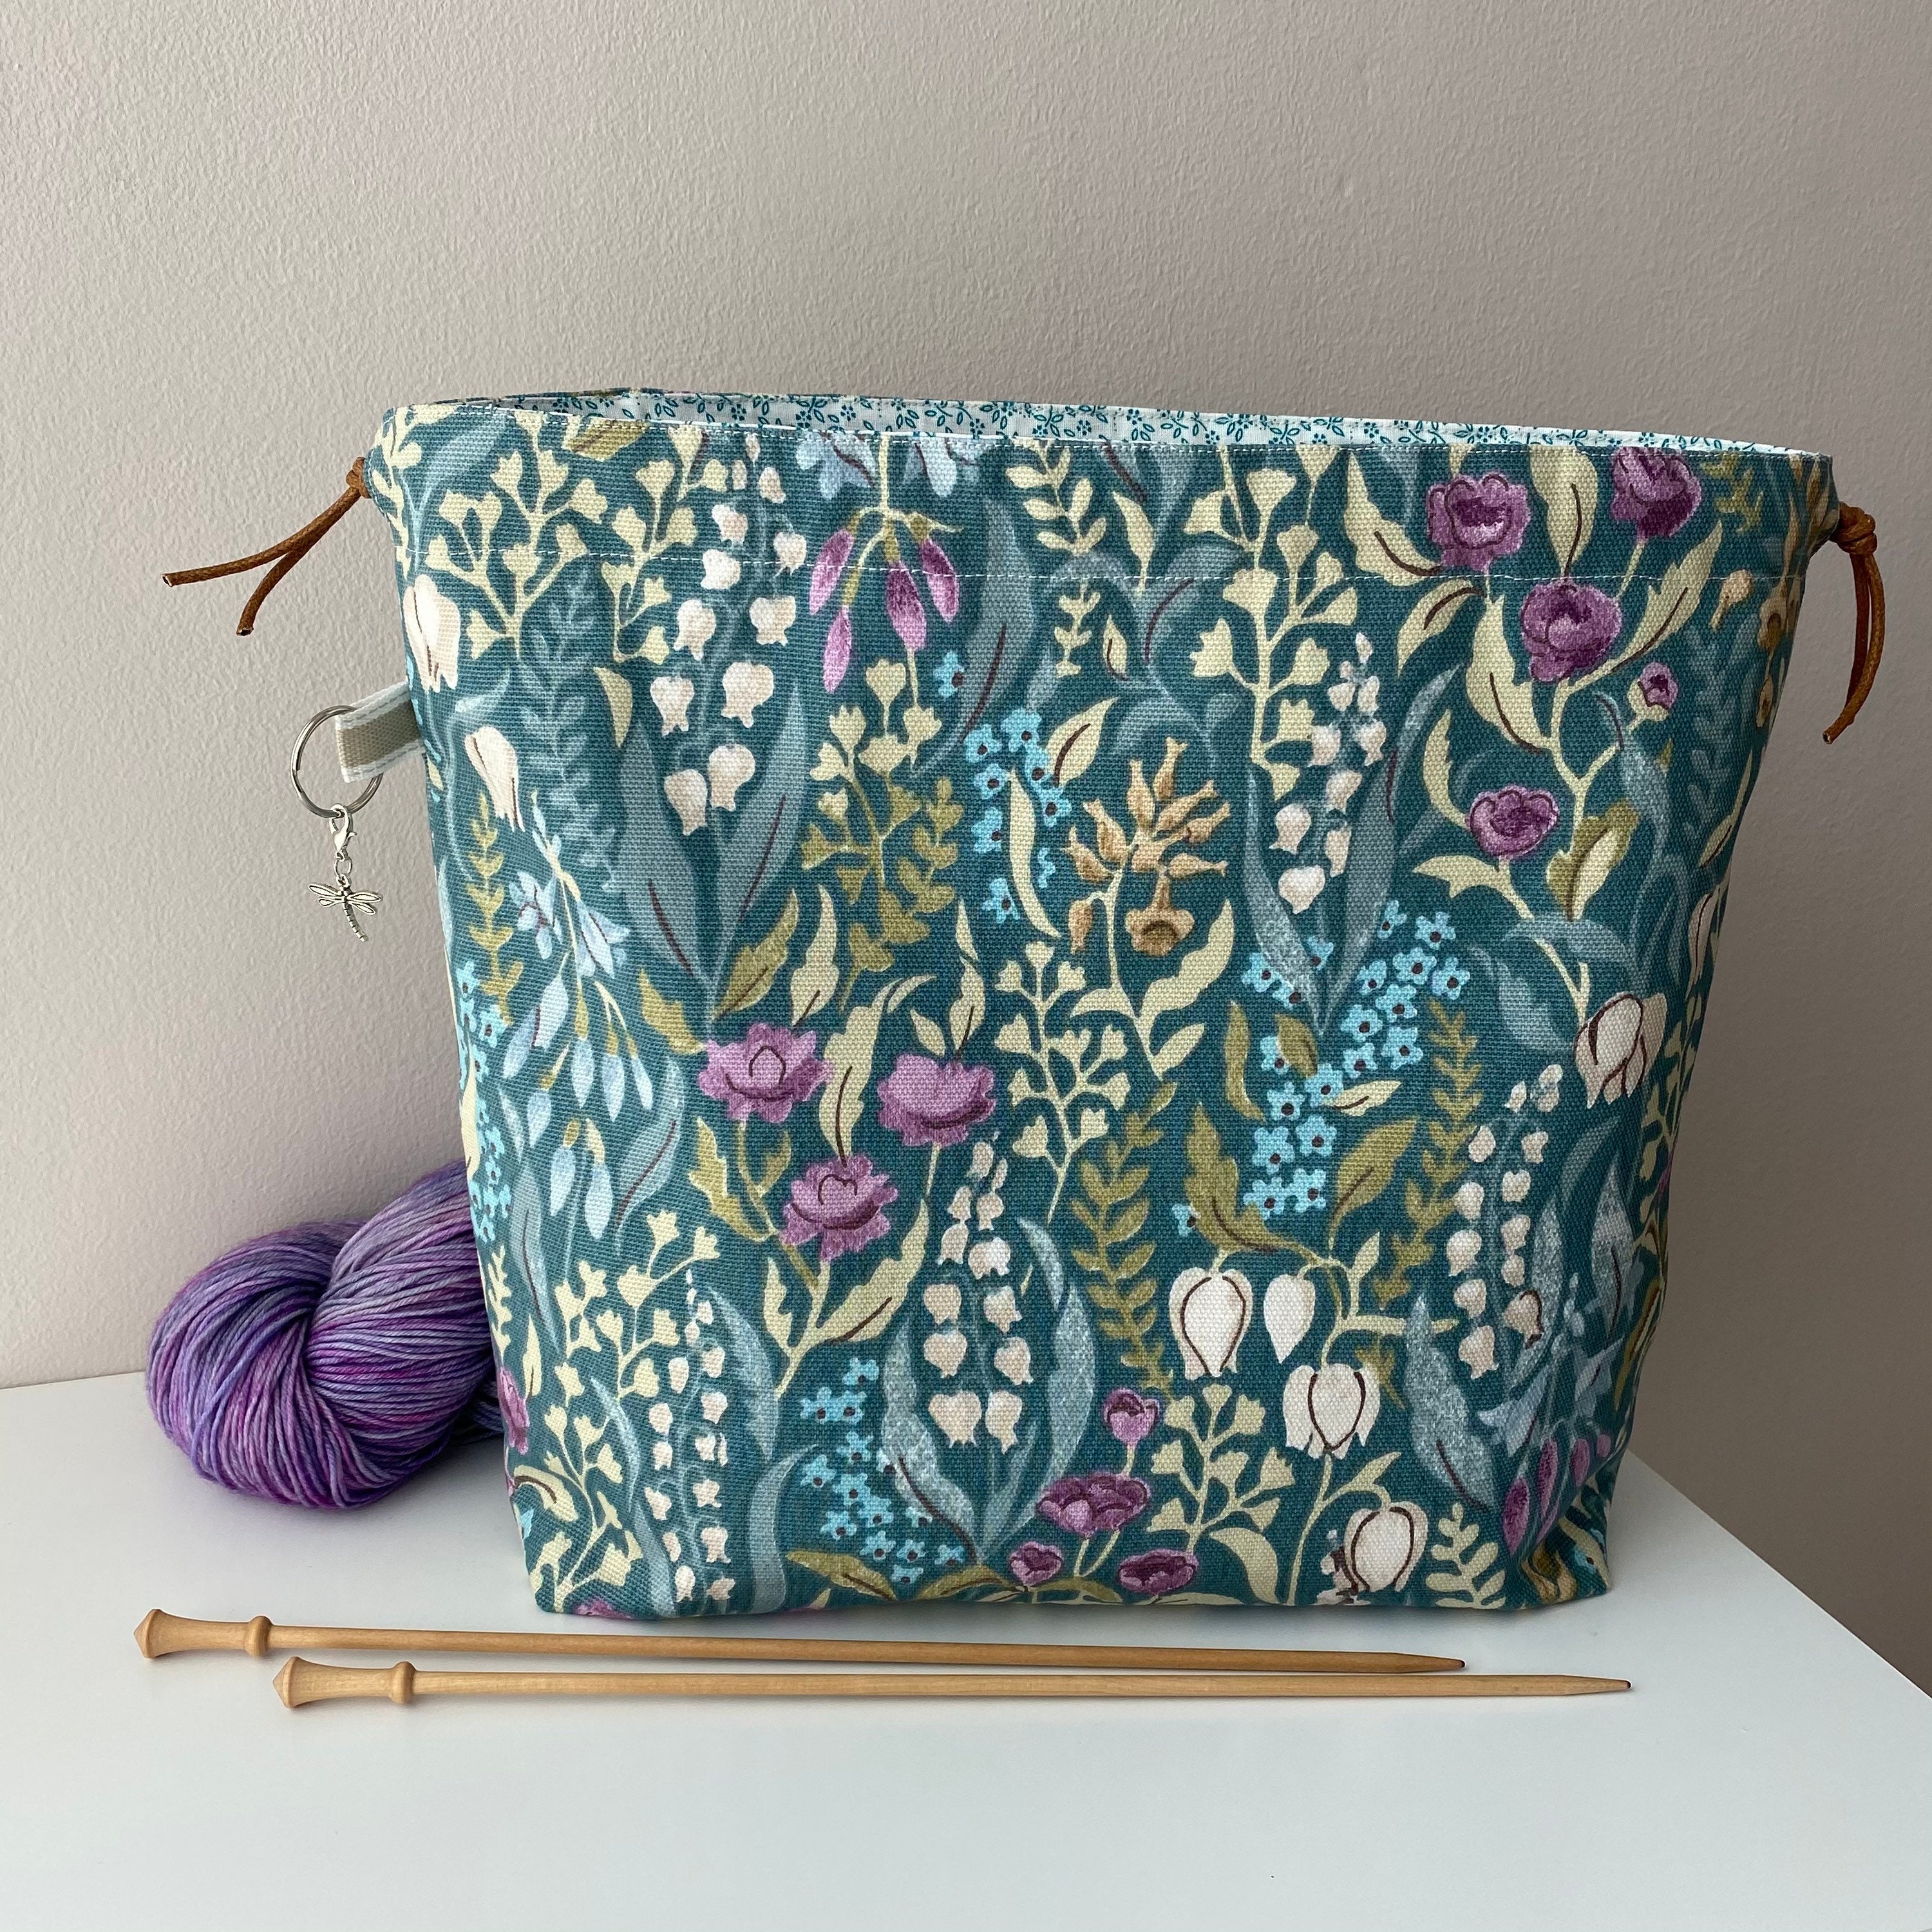 TOGETRUE Yarn Bag, Knitting Crochet Tote Bag, Lightweight Yarn Storage bag  Organizer, Travel Knitting wrist bag, Yarn Tote Bags for Crocheting